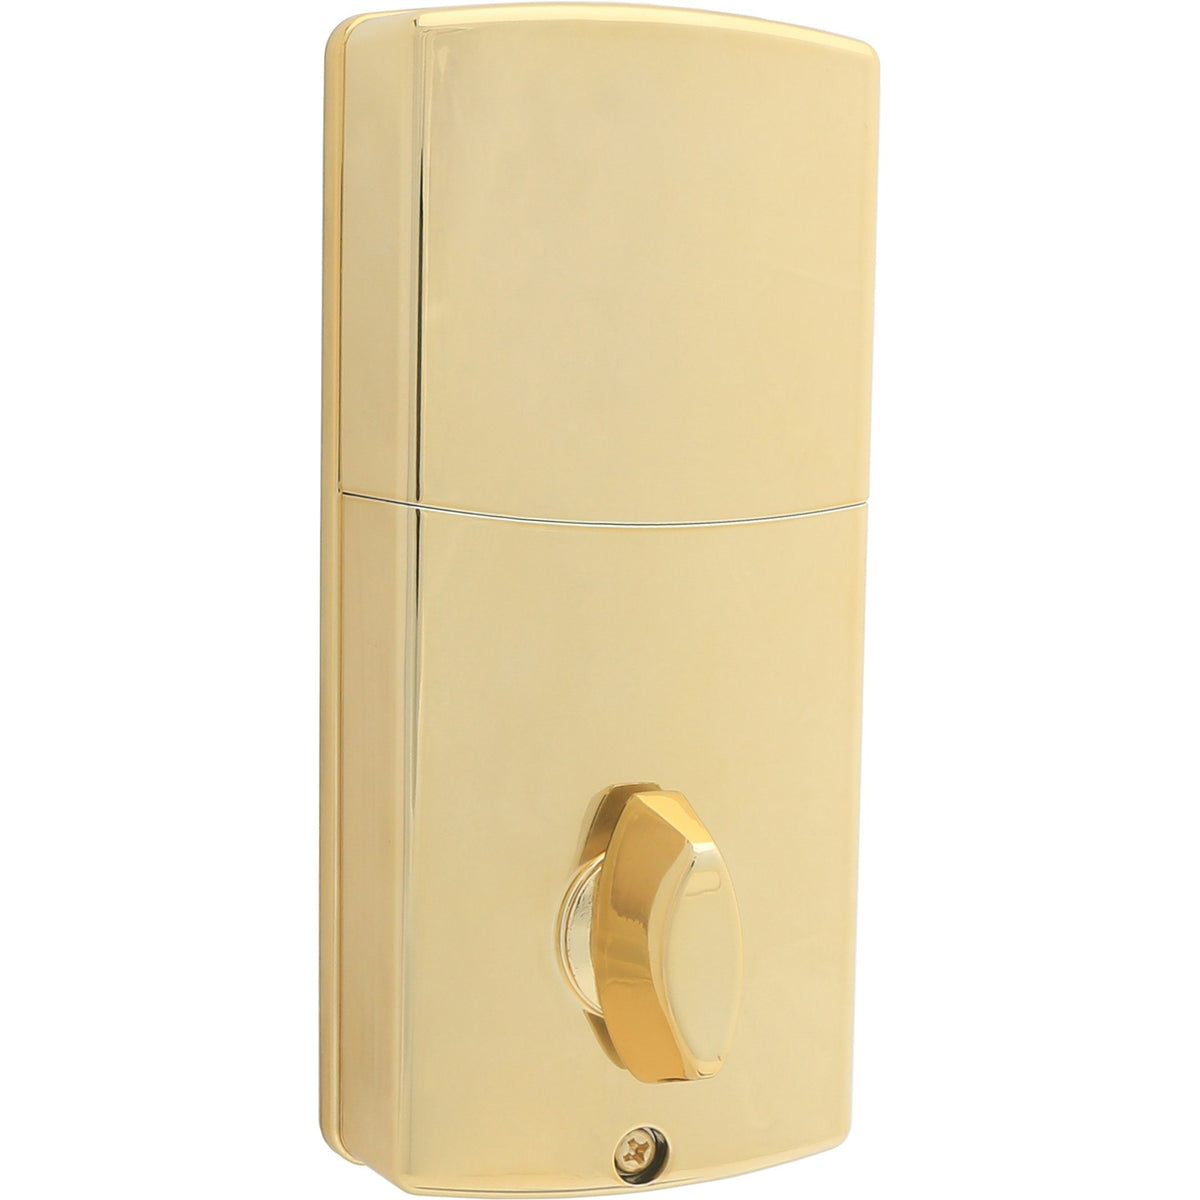 Honeywell 8712009 Electronic Deadbolt Door Lock with Keypad in Polished Brass Backside